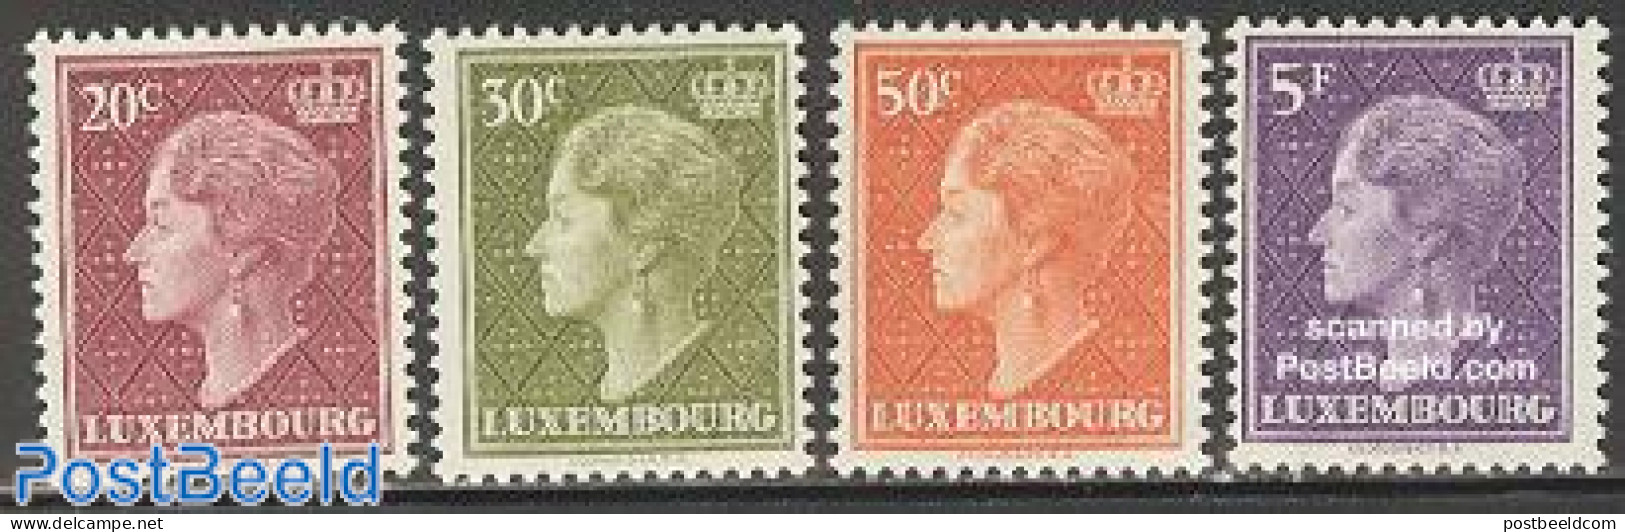 Luxemburg 1958 Definitives 4v, Mint NH - Ungebraucht